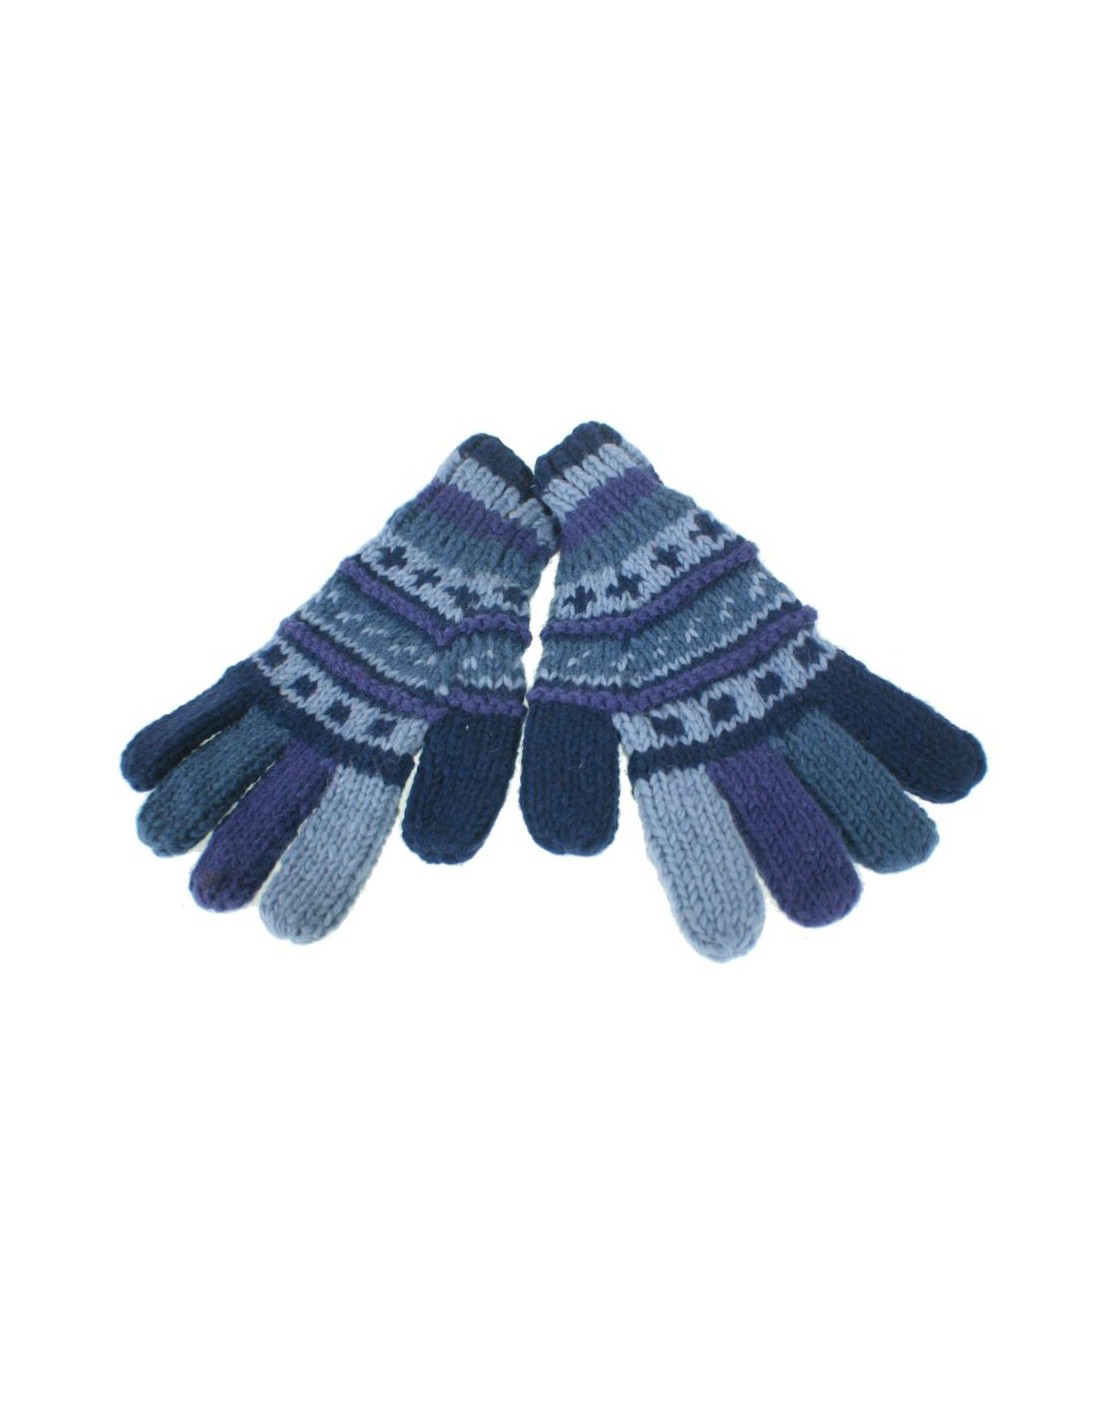 Guants de llana color blau calents suaus per l'hivern guants unisex artesanal adult regal original d'estil hippie